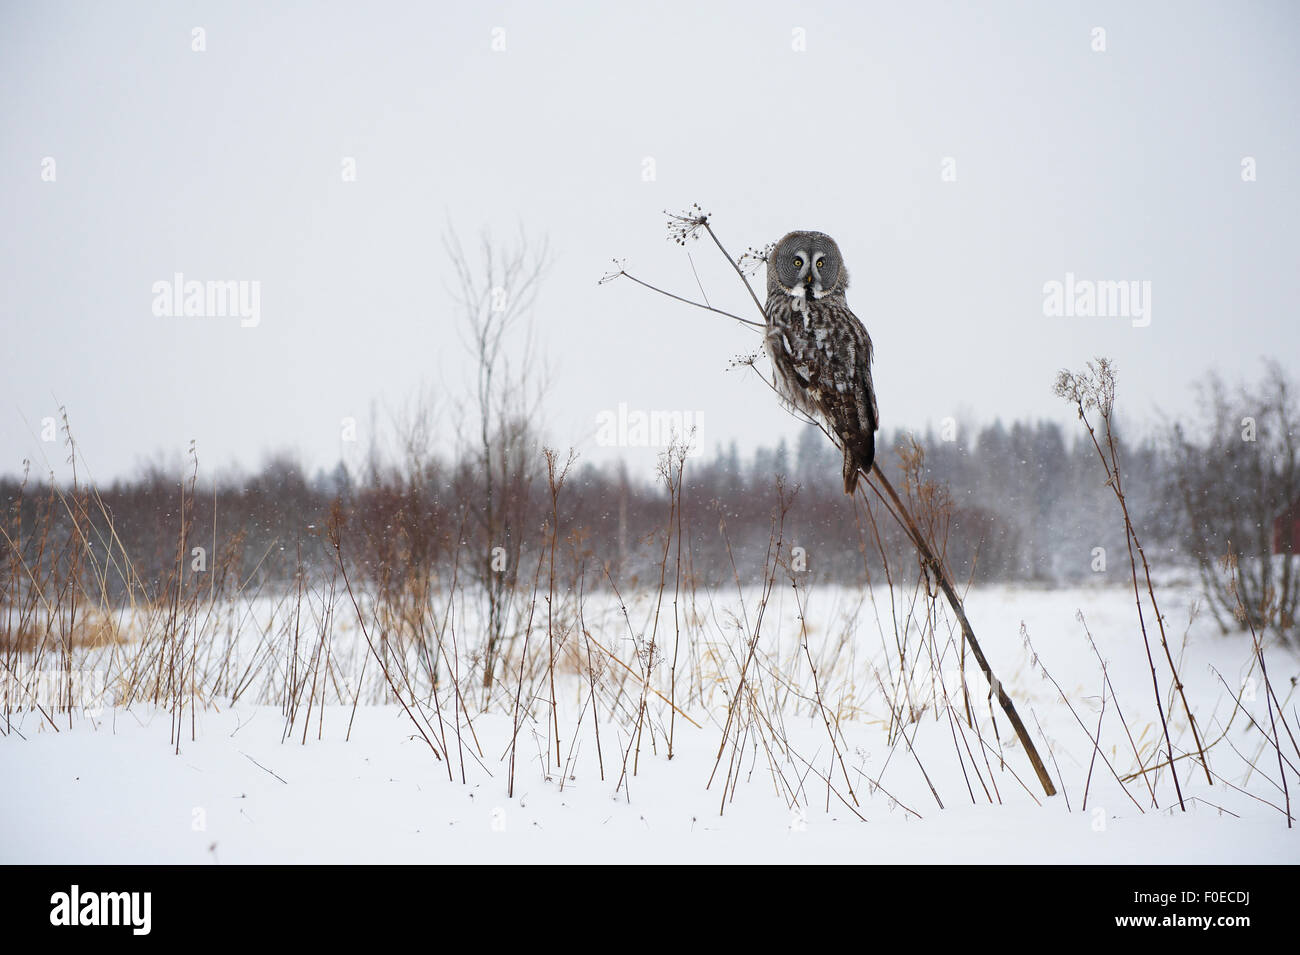 Female Great grey owl (Strix nebulosa) perched on hogweed, Oulu, Finland, February 2009 Stock Photo